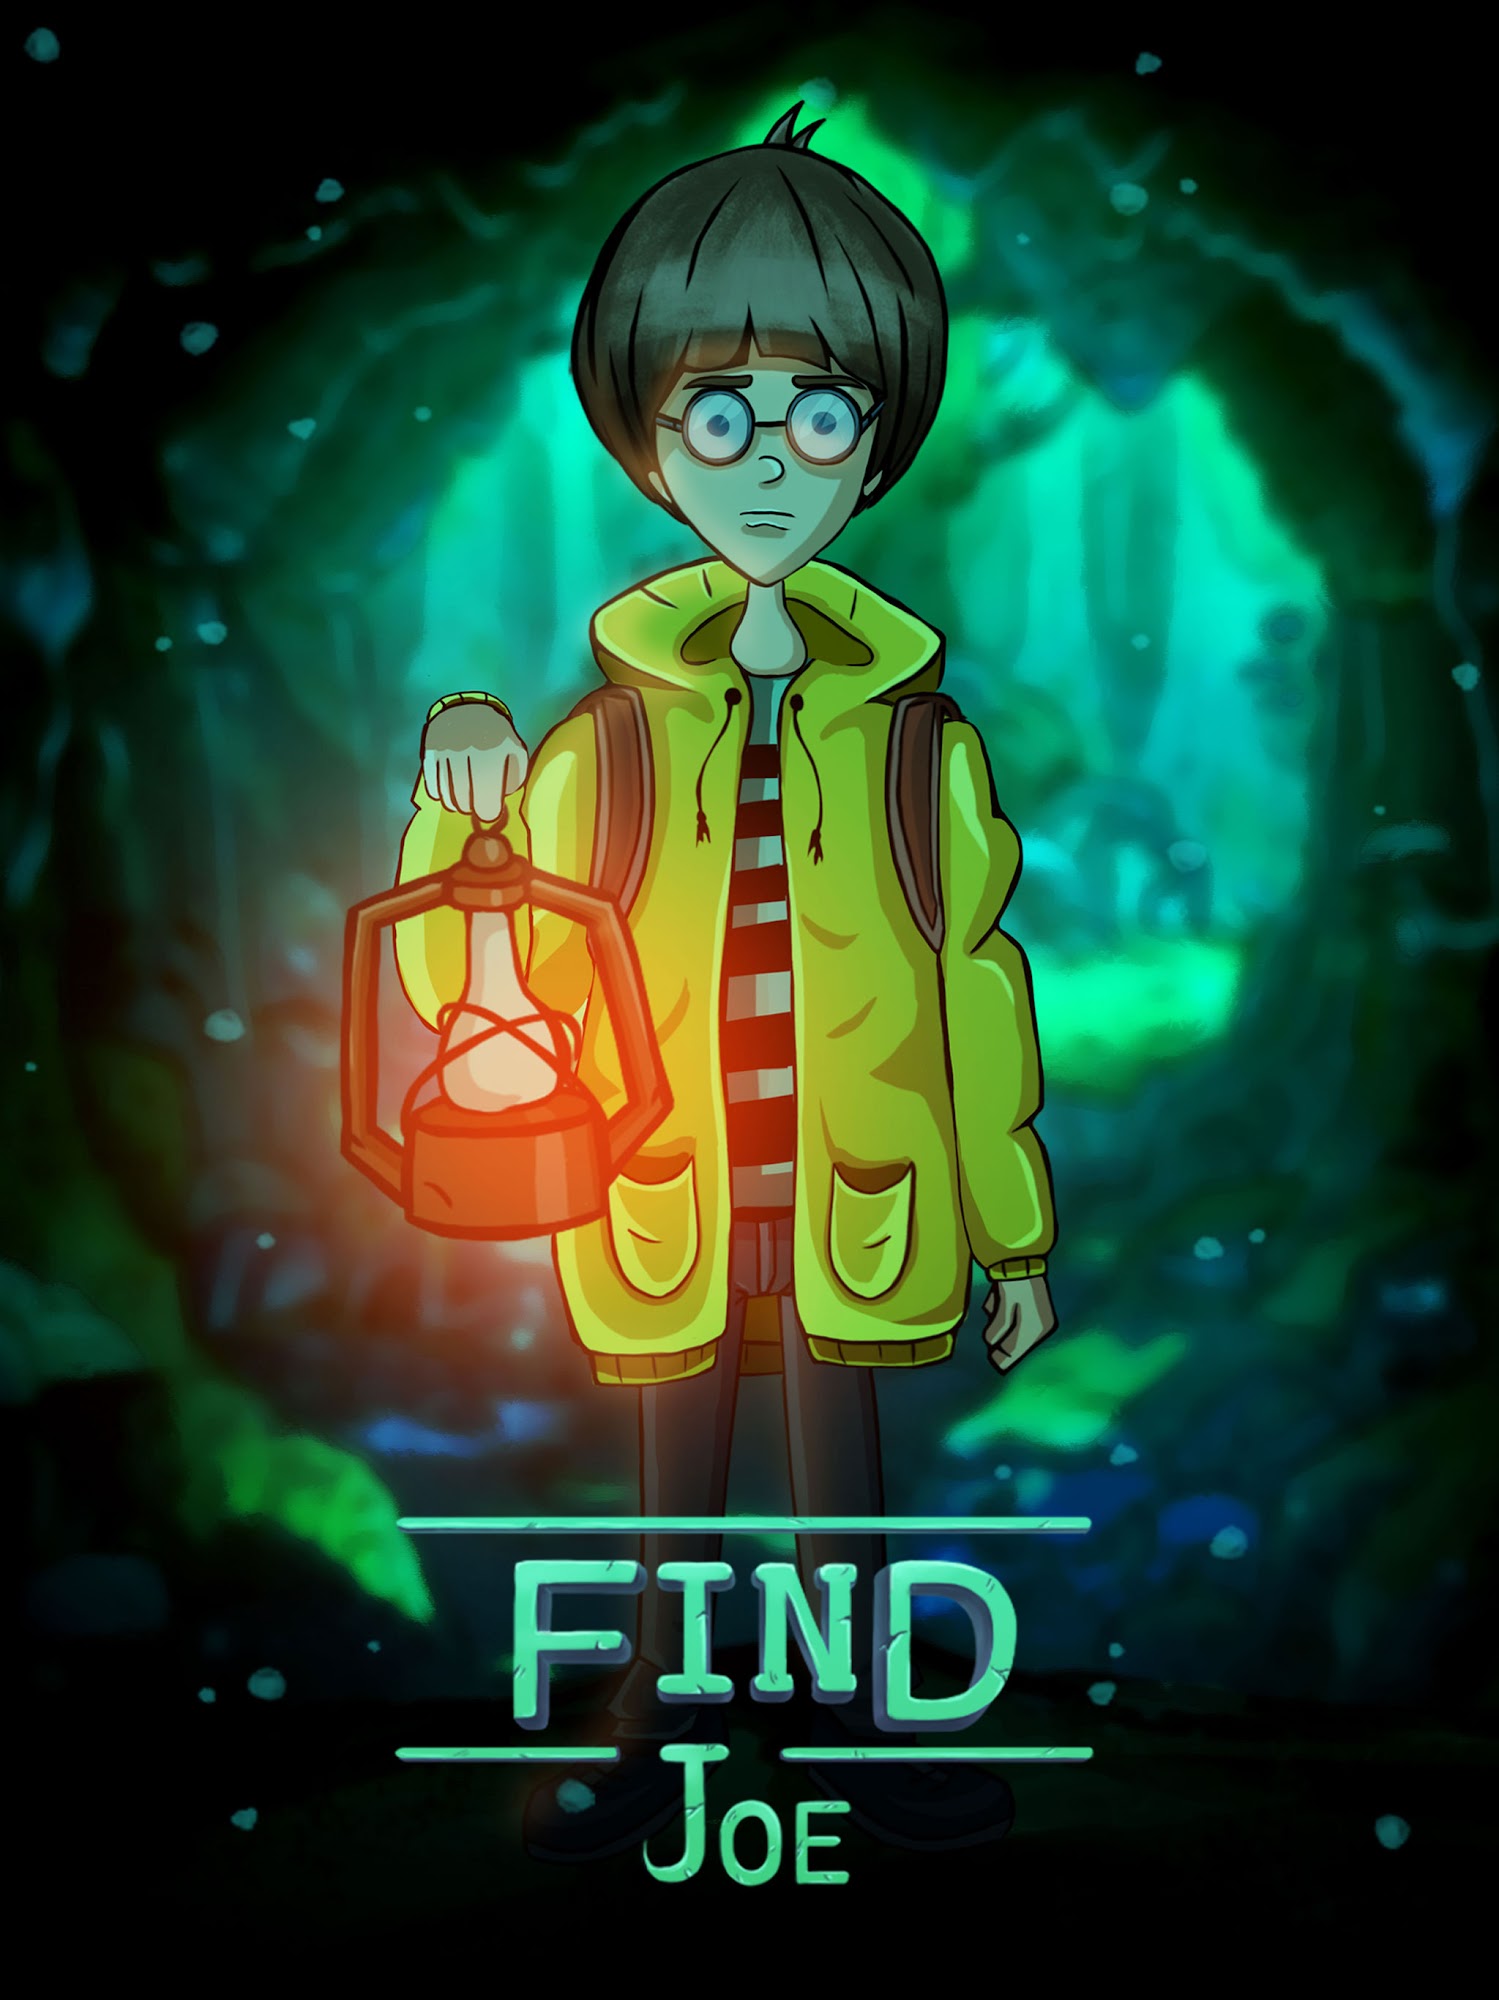 Télécharger Find Joe : Unsolved Mystery pour Android gratuit.